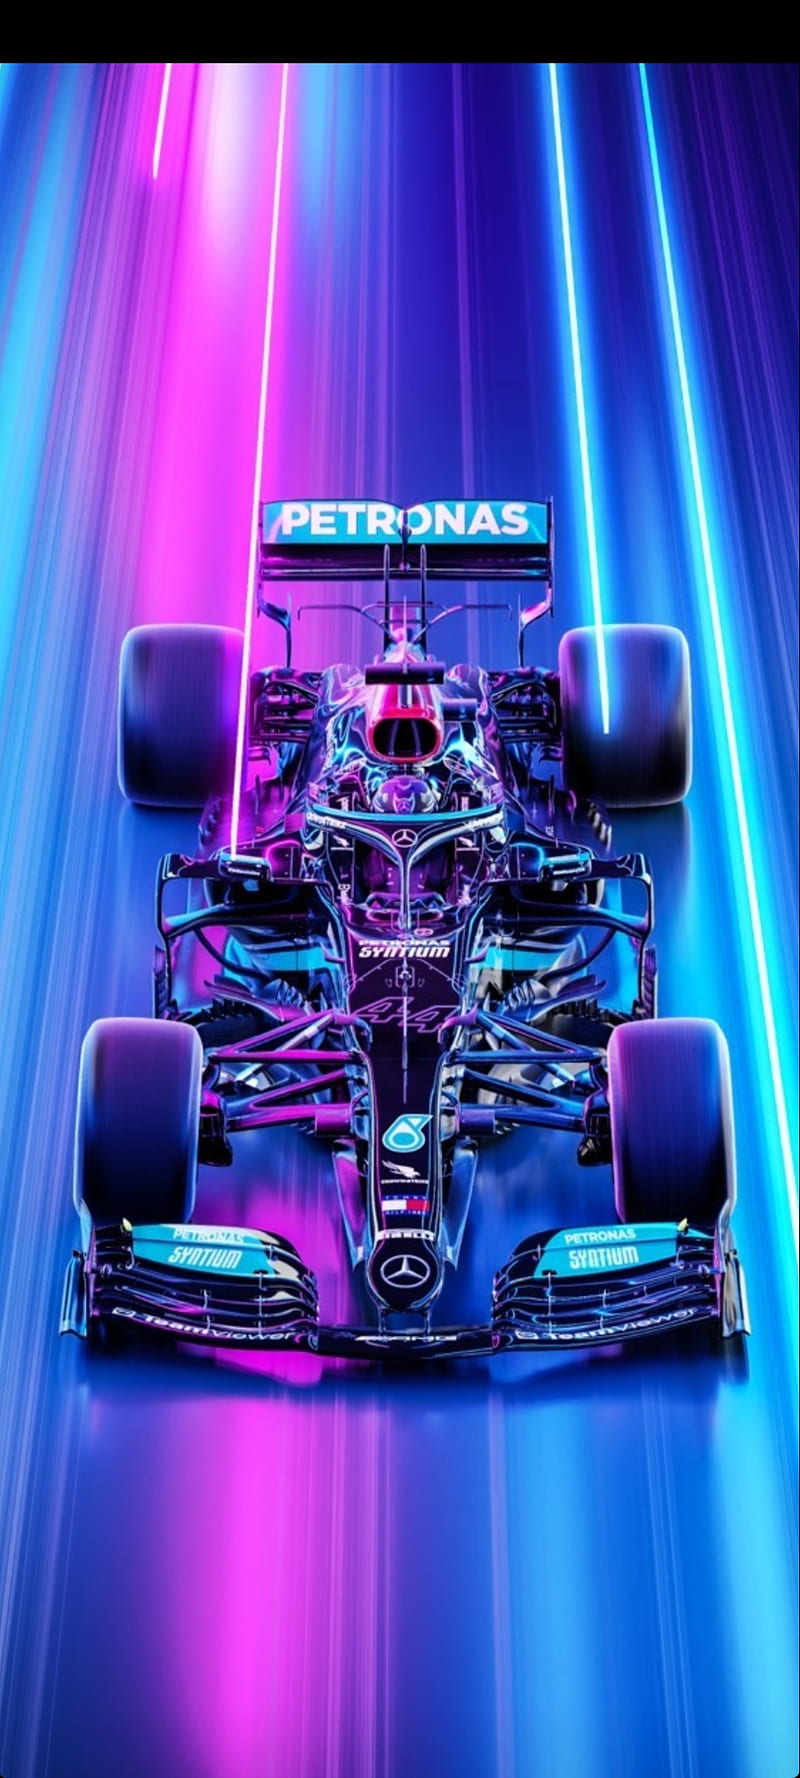 Lewis Hamilton wallpaper 2 by JohnnySlowhand on DeviantArt